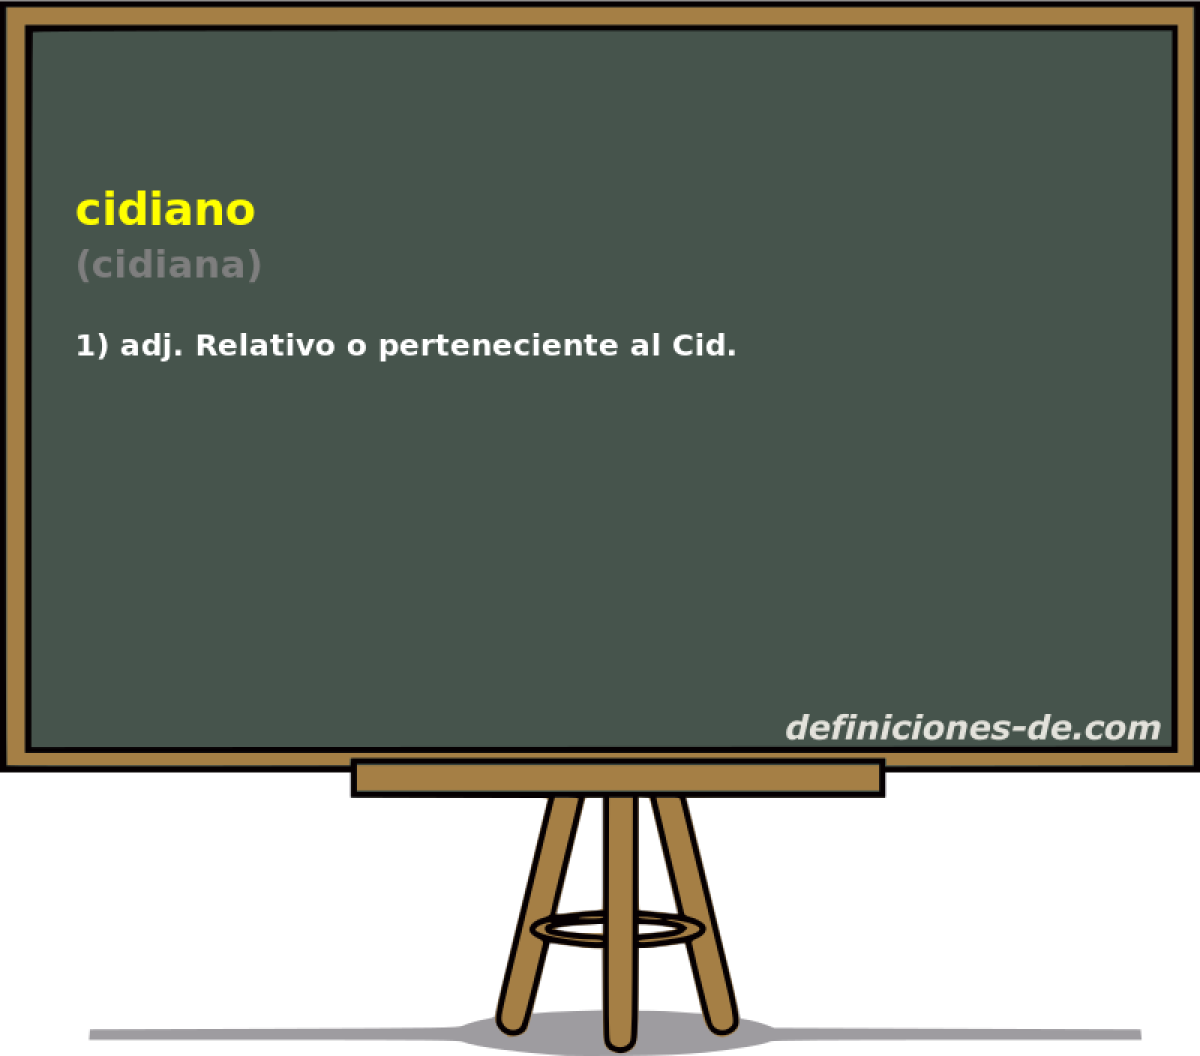 cidiano (cidiana)